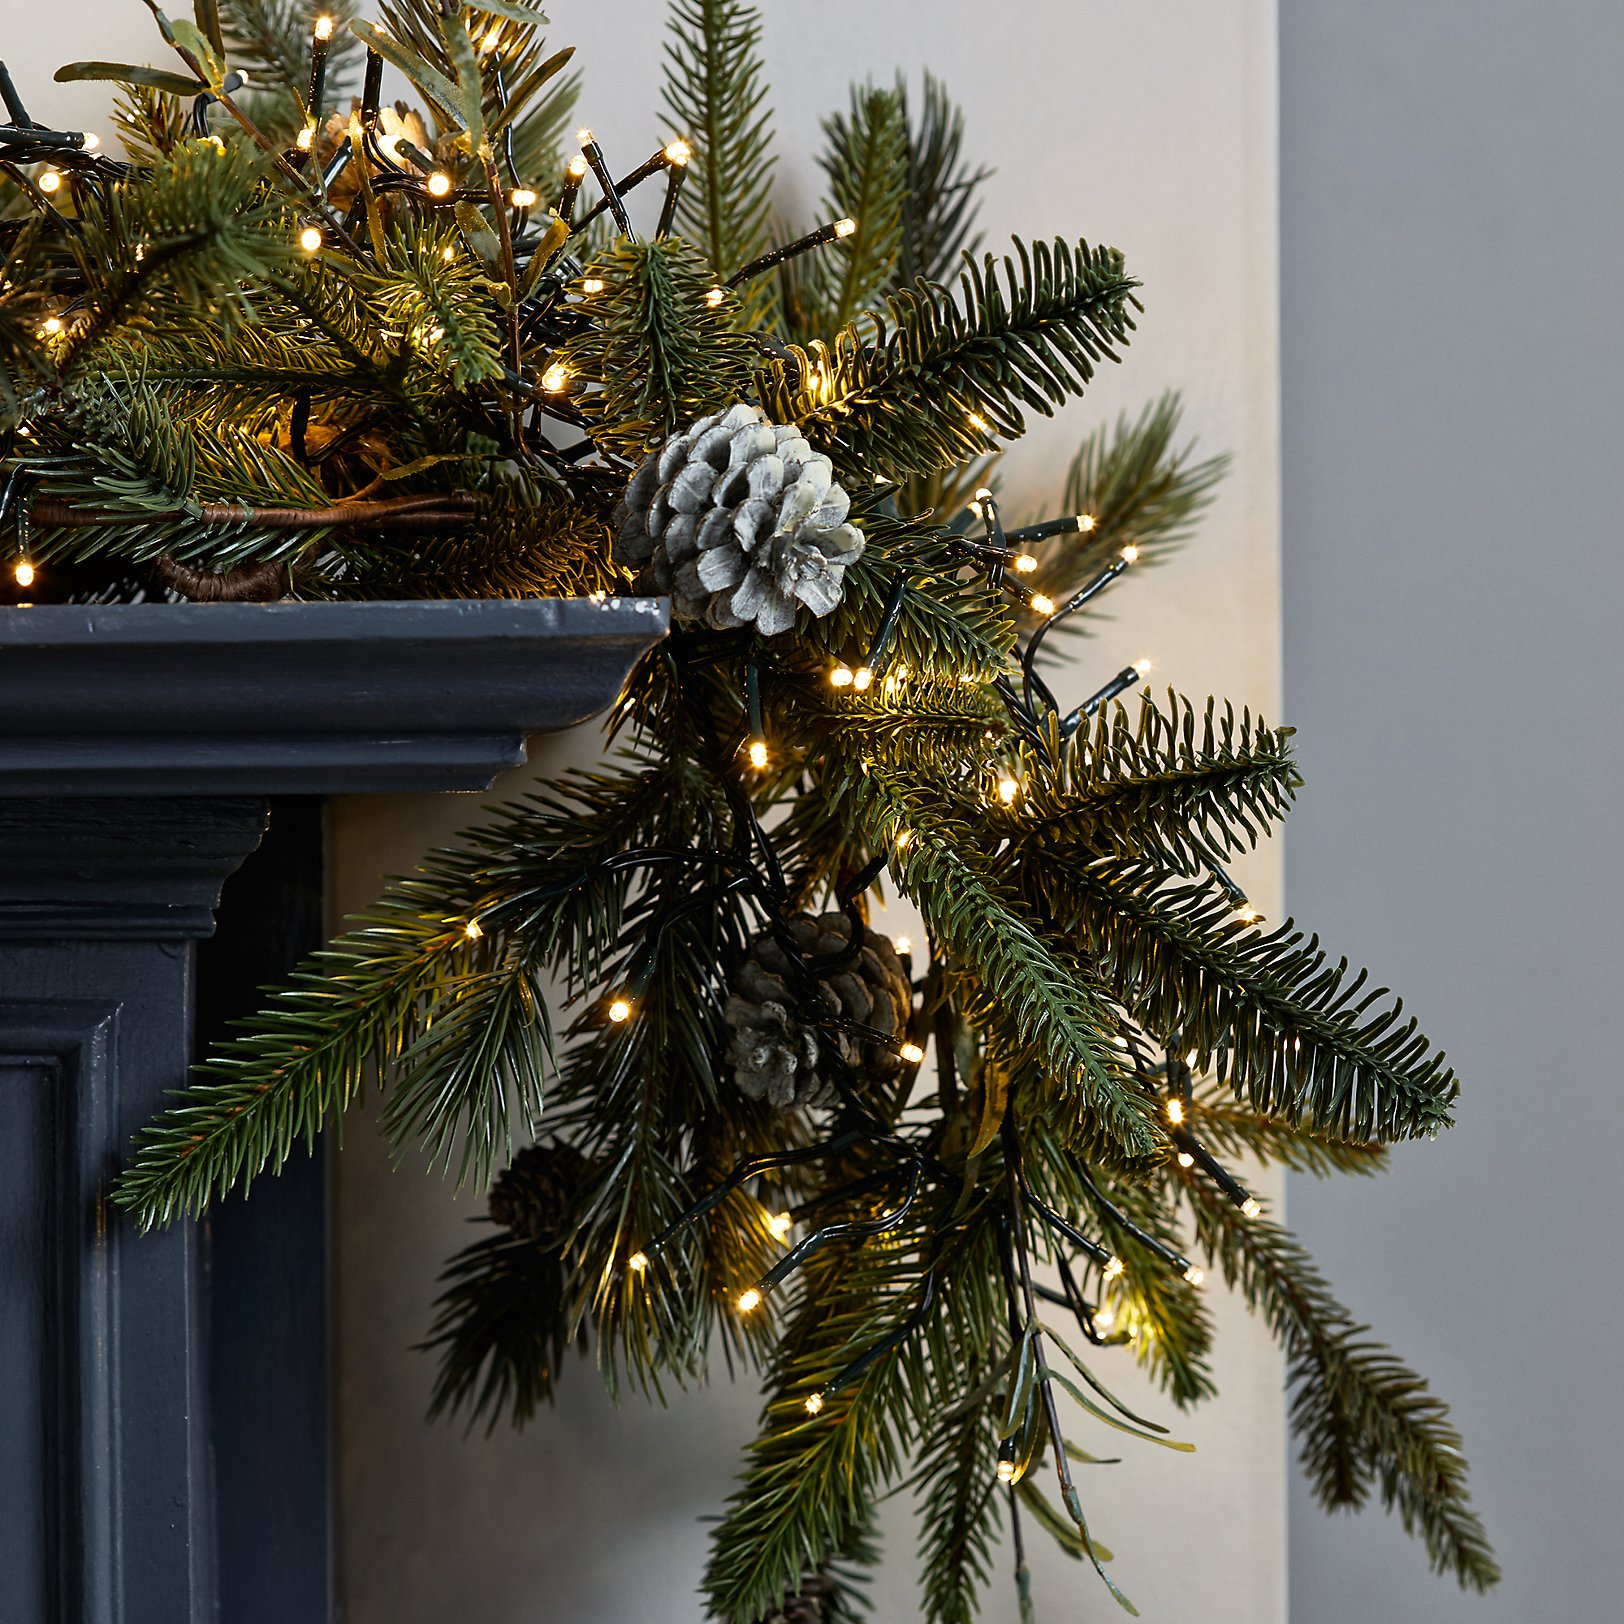 Image result for Christmas tree, lights